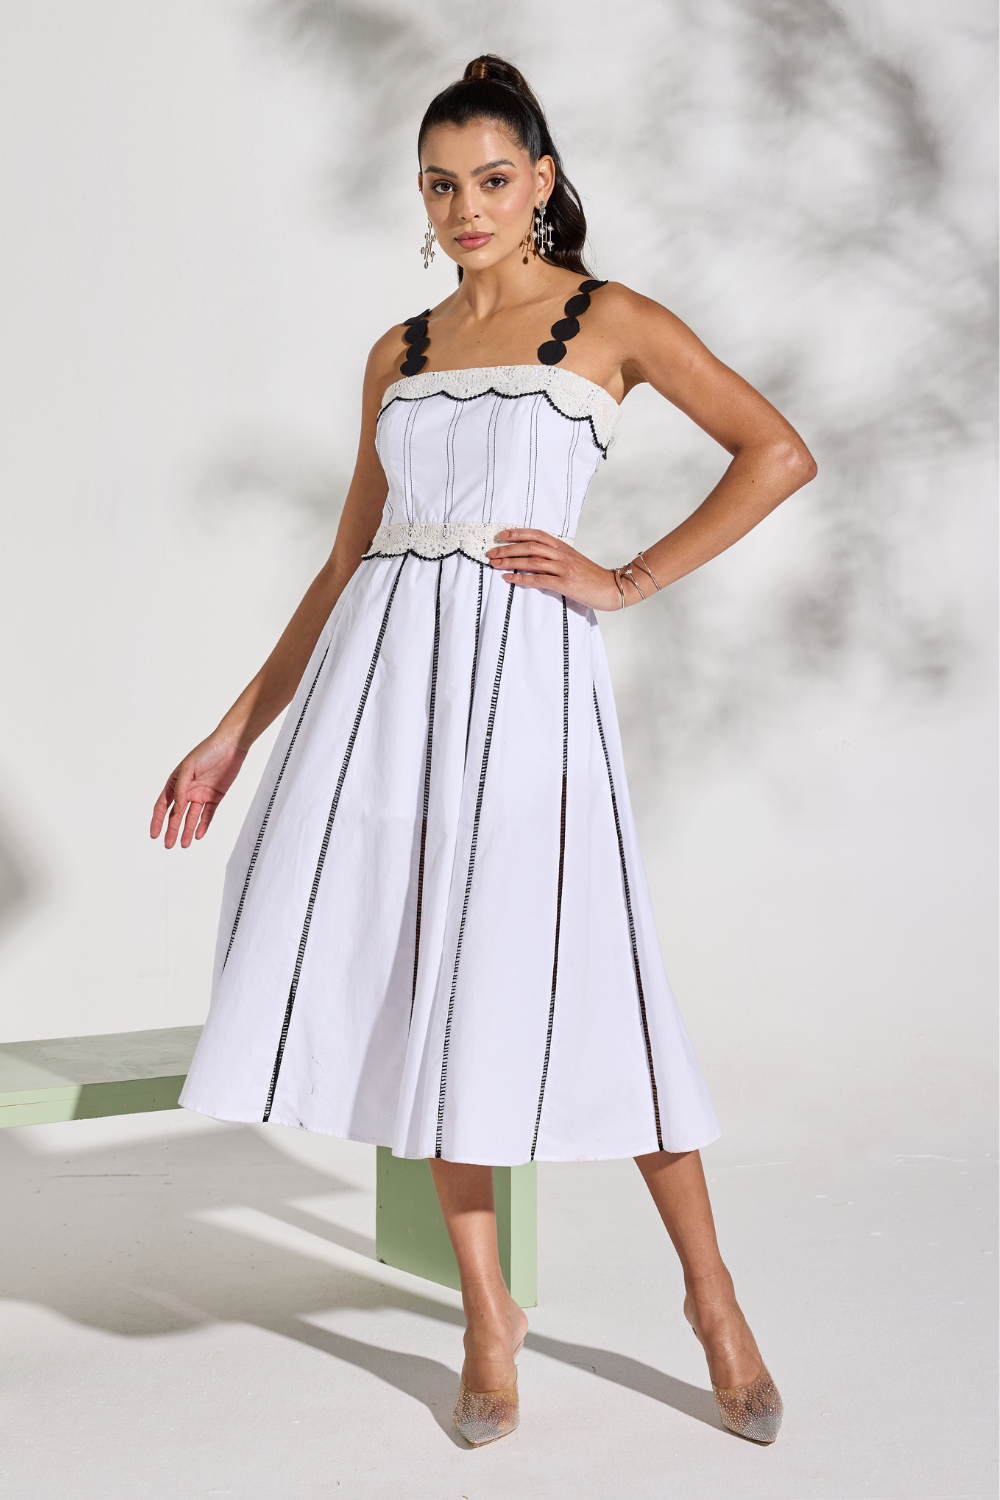 Monochrome Lace Dress, a product by Saltz n sand 